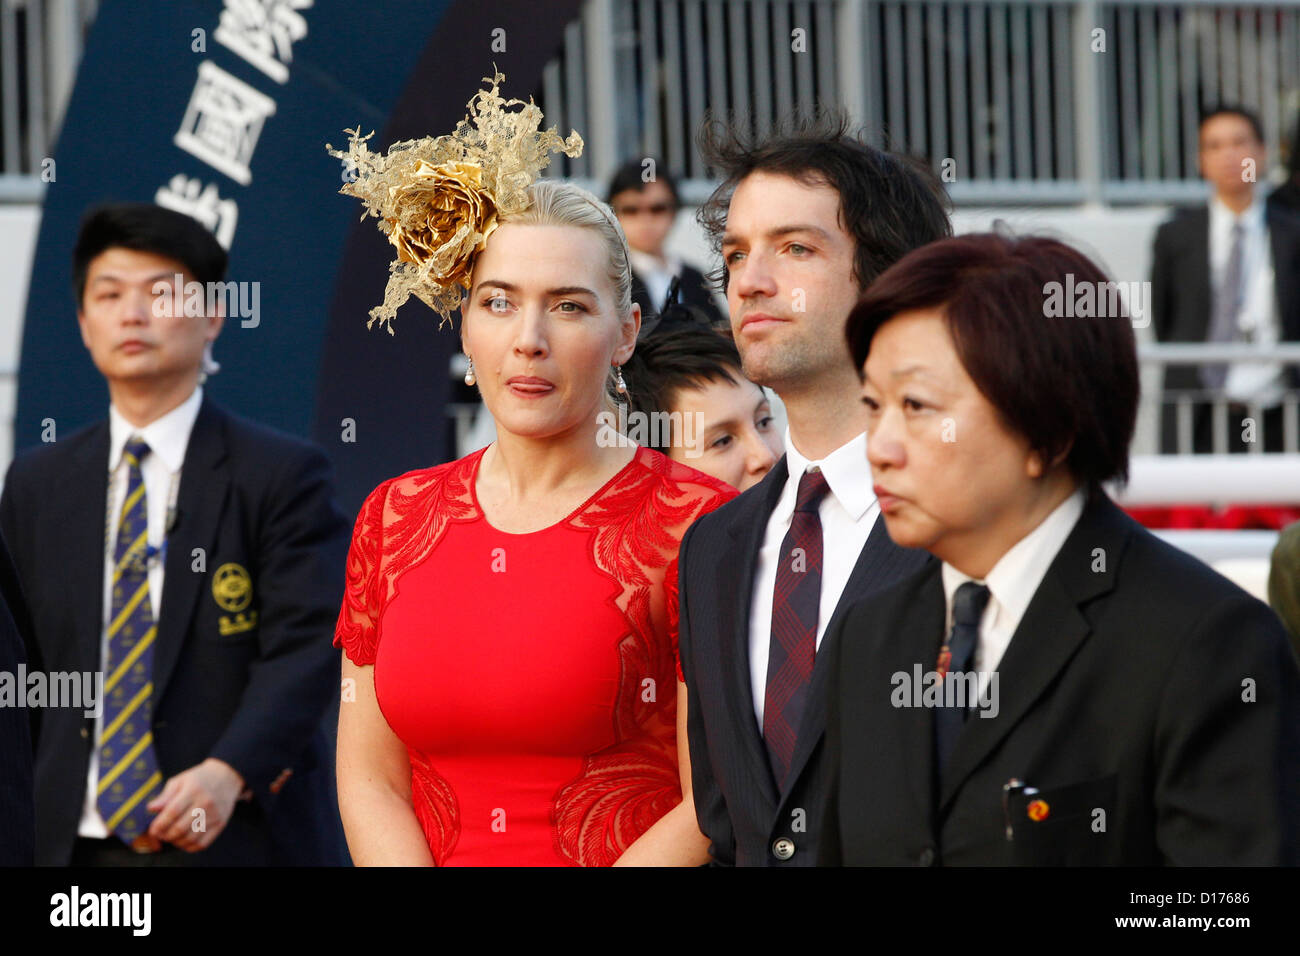 09.12.2012 - Hongkong; Kate Winslet (english actress) and boyfriend Ned Rocknroll during the Longines Hong Kong International Races. Credit: Lajos-Eric Balogh/turfstock.com Stock Photo